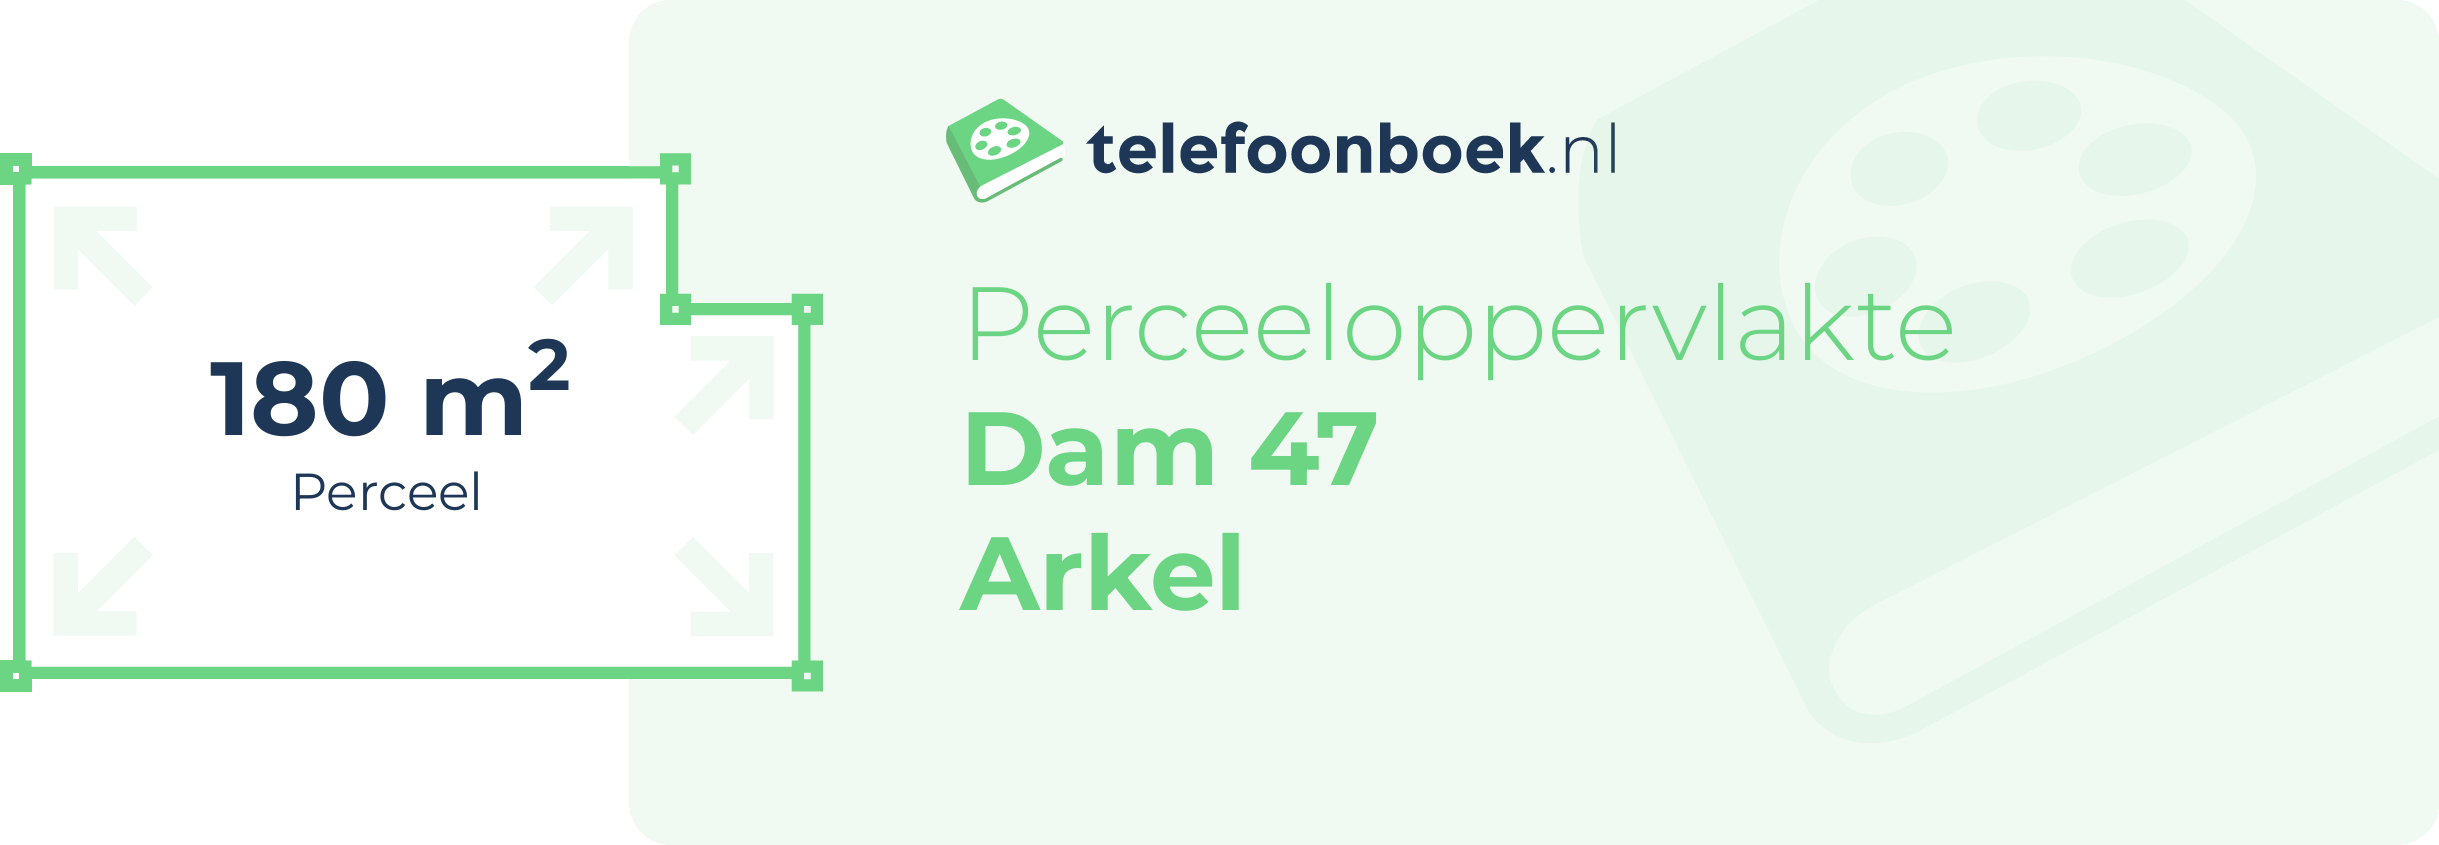 Perceeloppervlakte Dam 47 Arkel